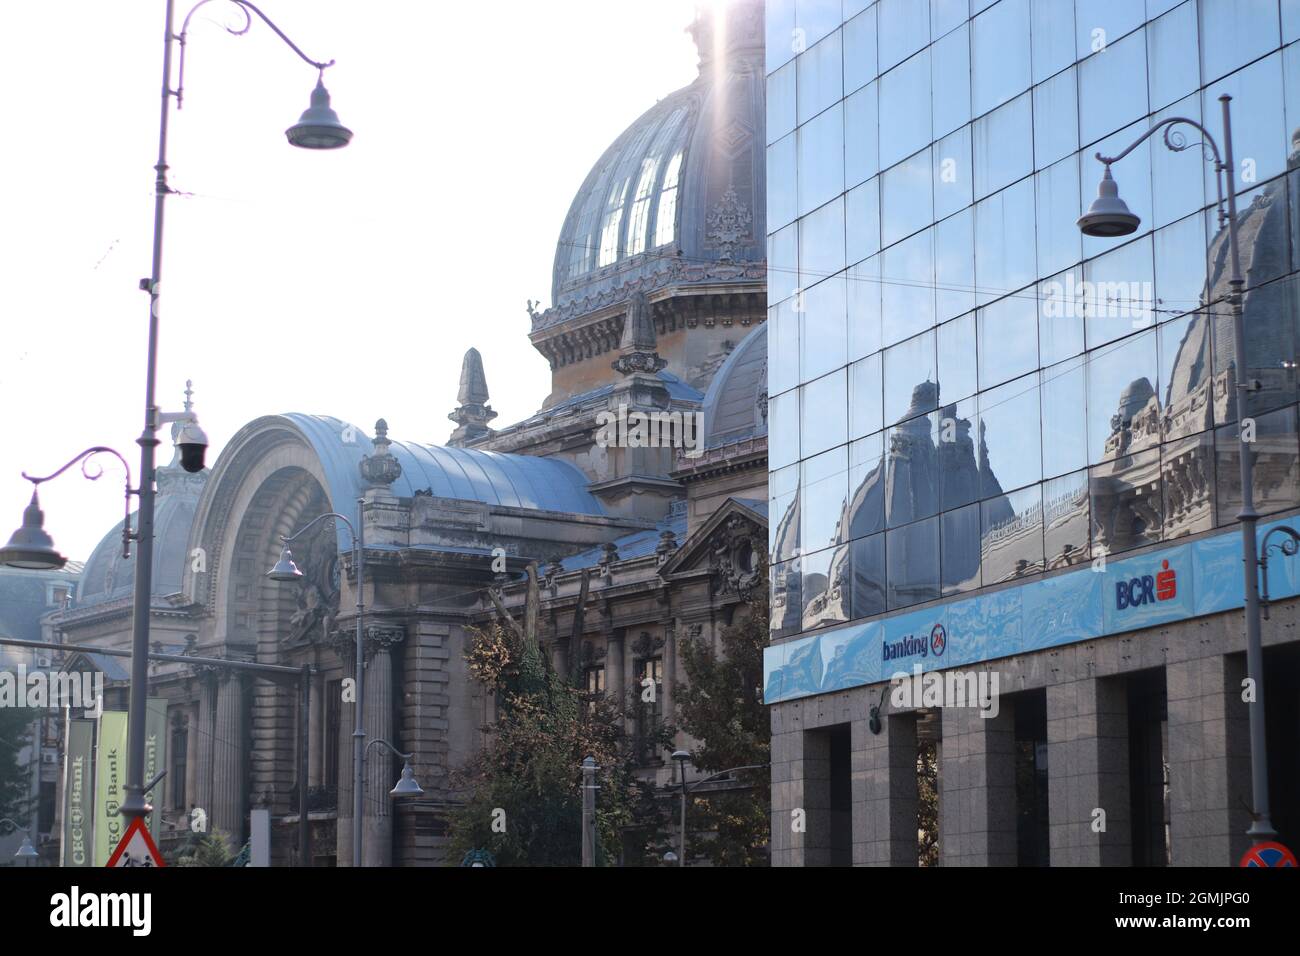 12.03.2019, Bucharest Romania CEC bank, besides BCR bank, beautiful architecture Stock Photo